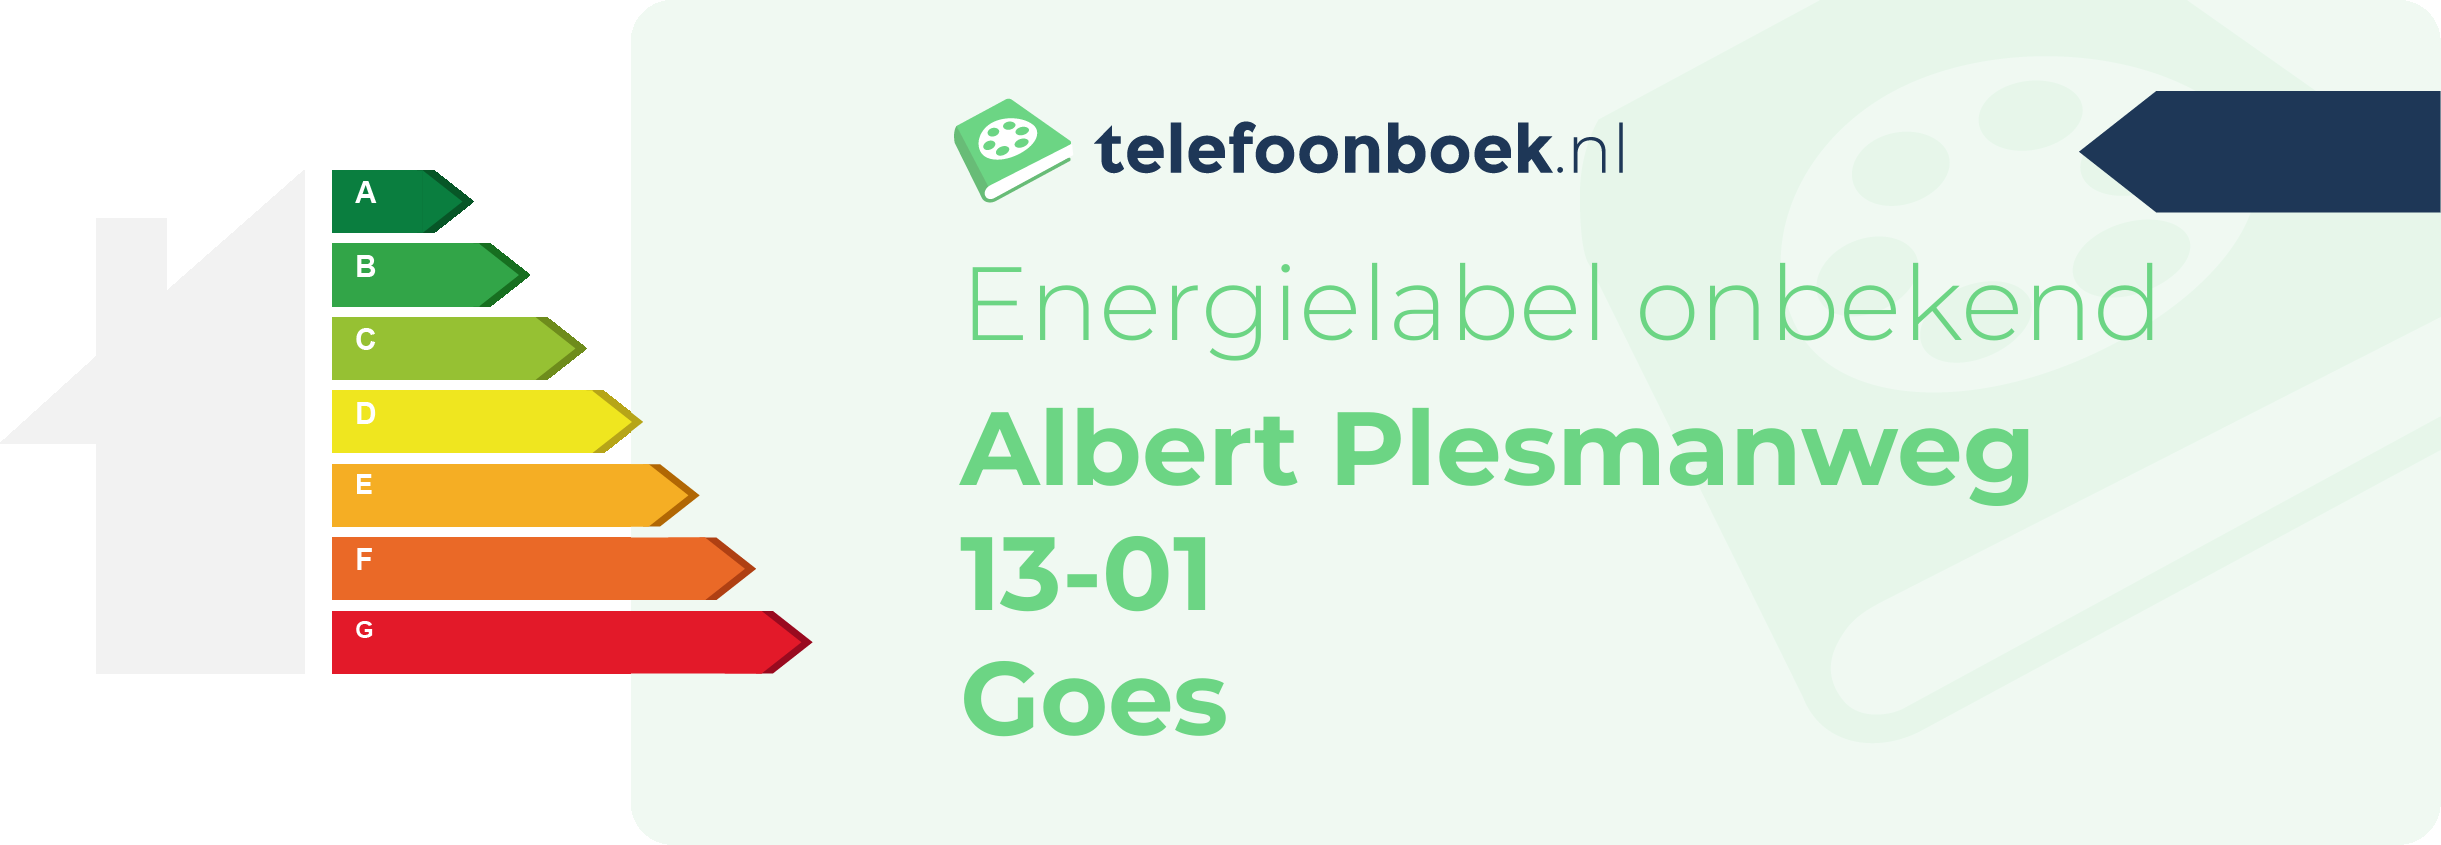 Energielabel Albert Plesmanweg 13-01 Goes